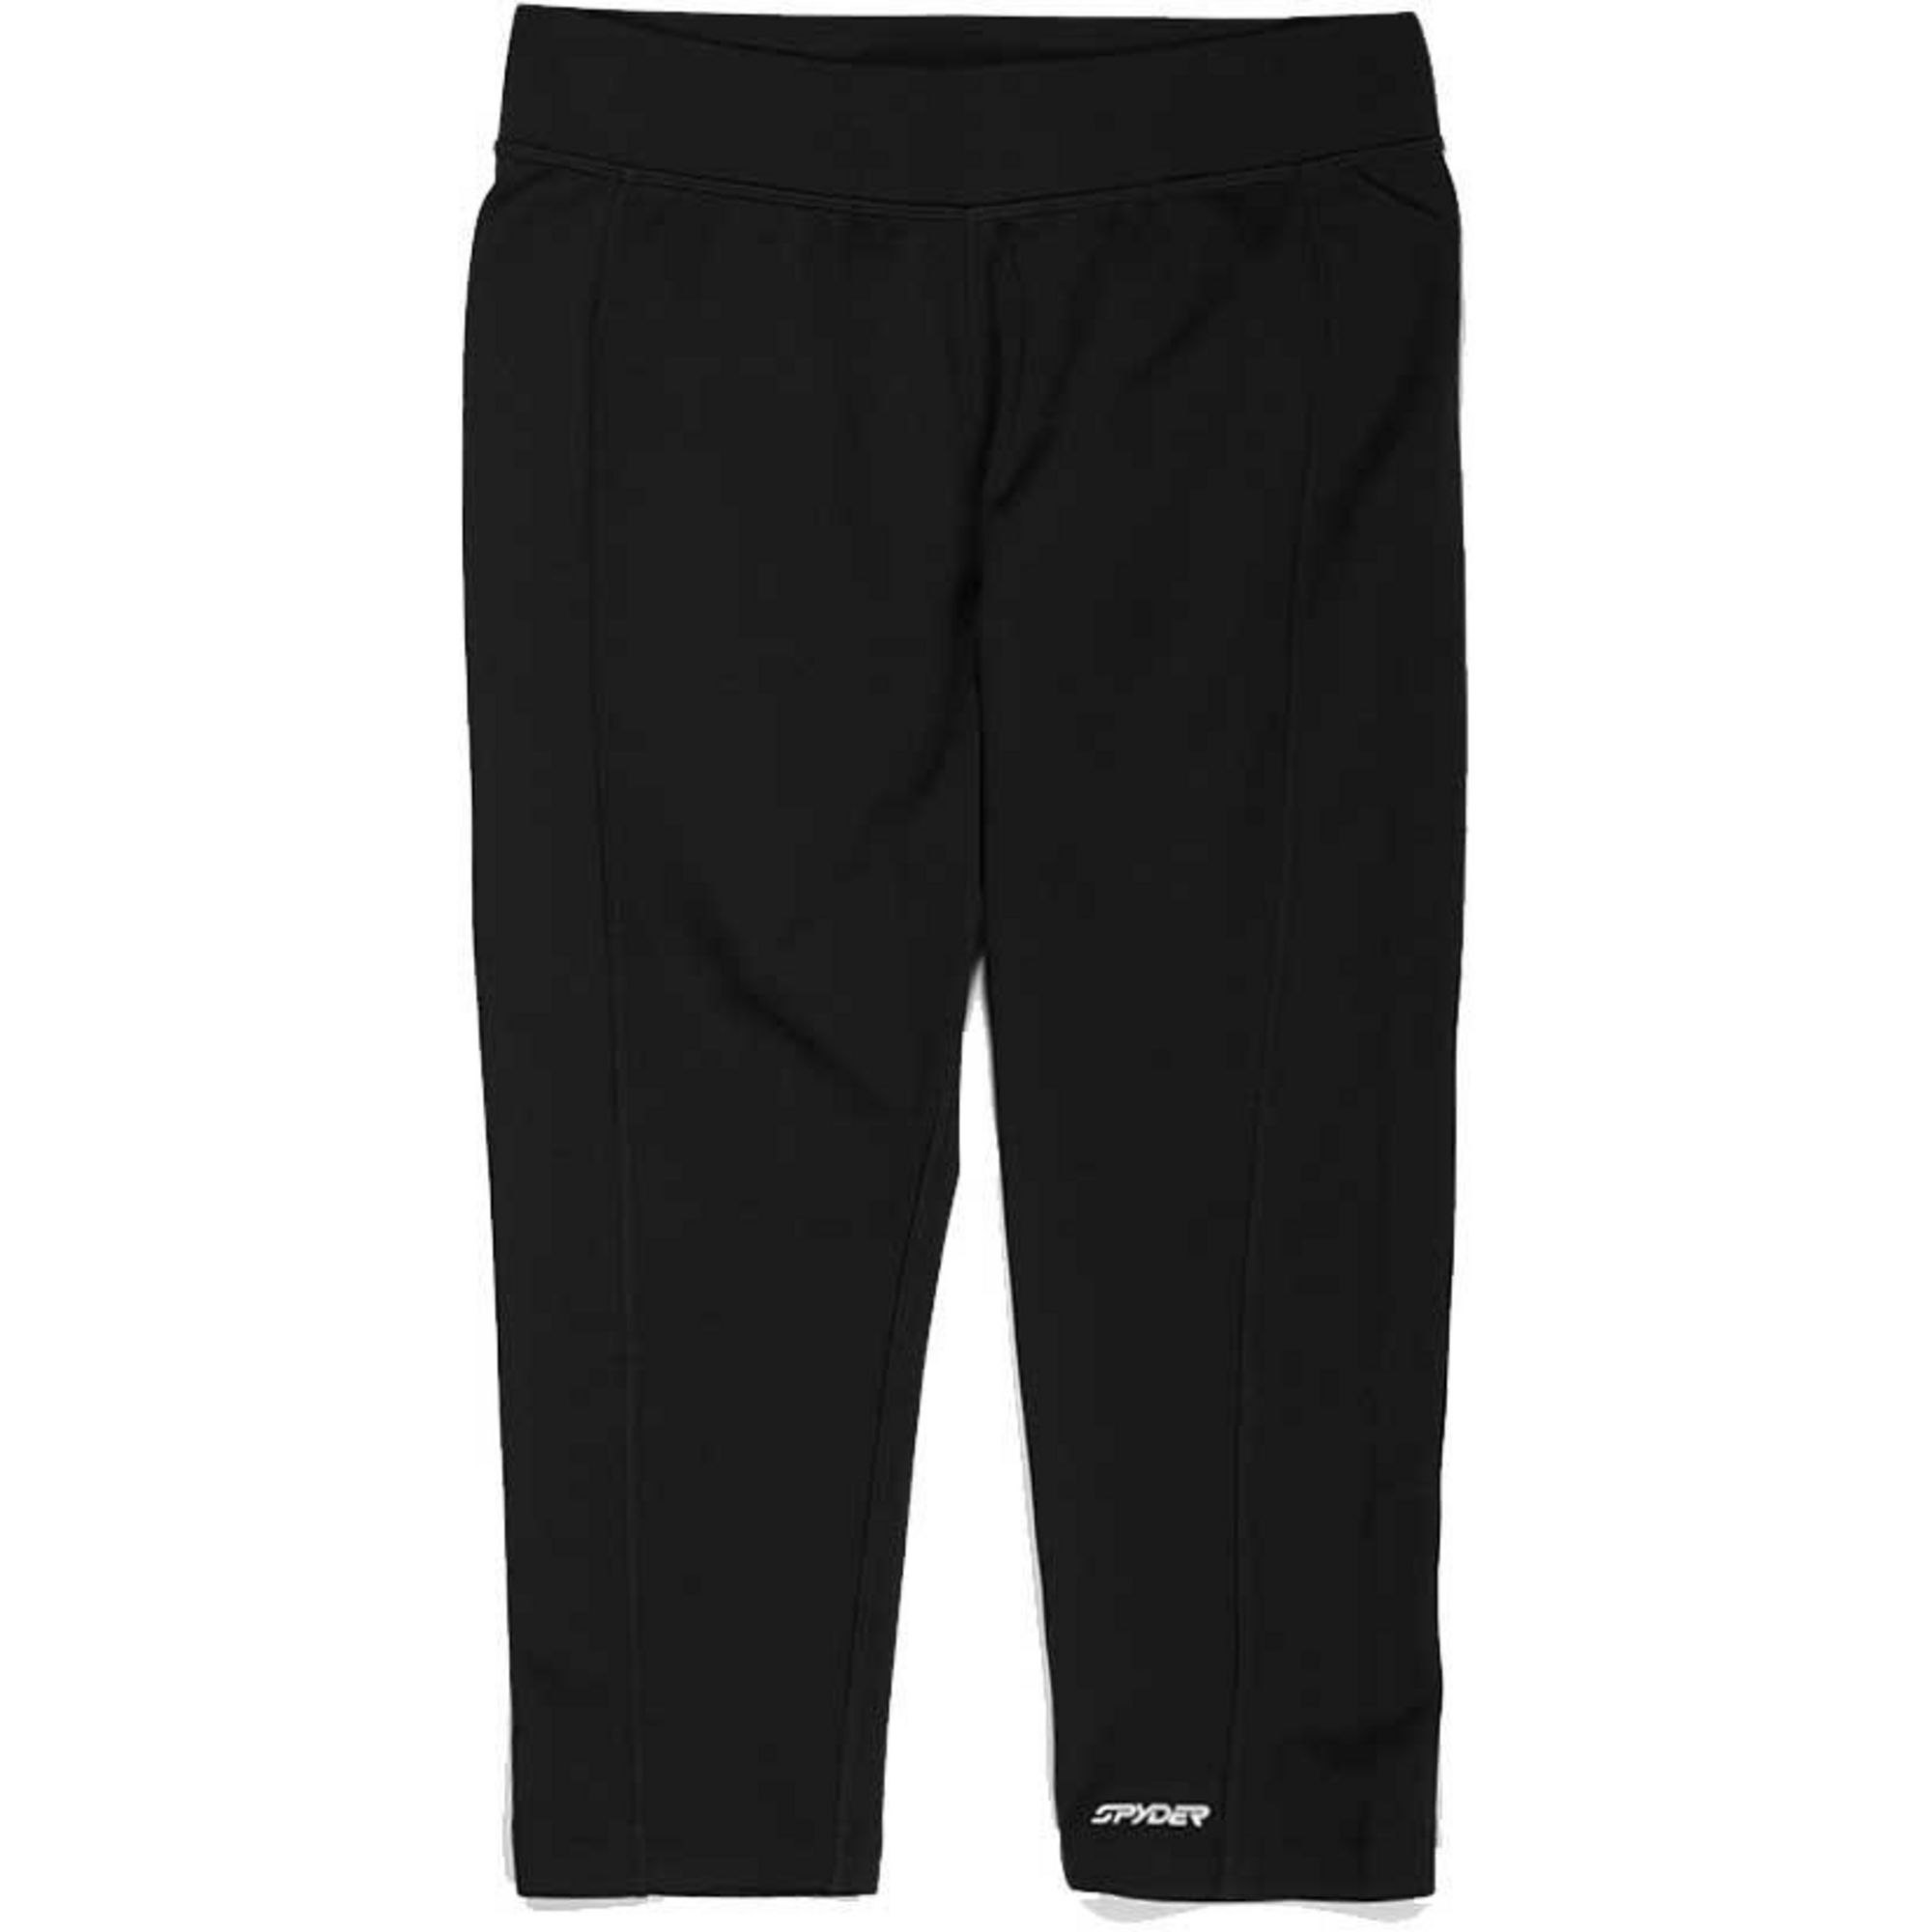 Spyder activewear women’s pants black size medium